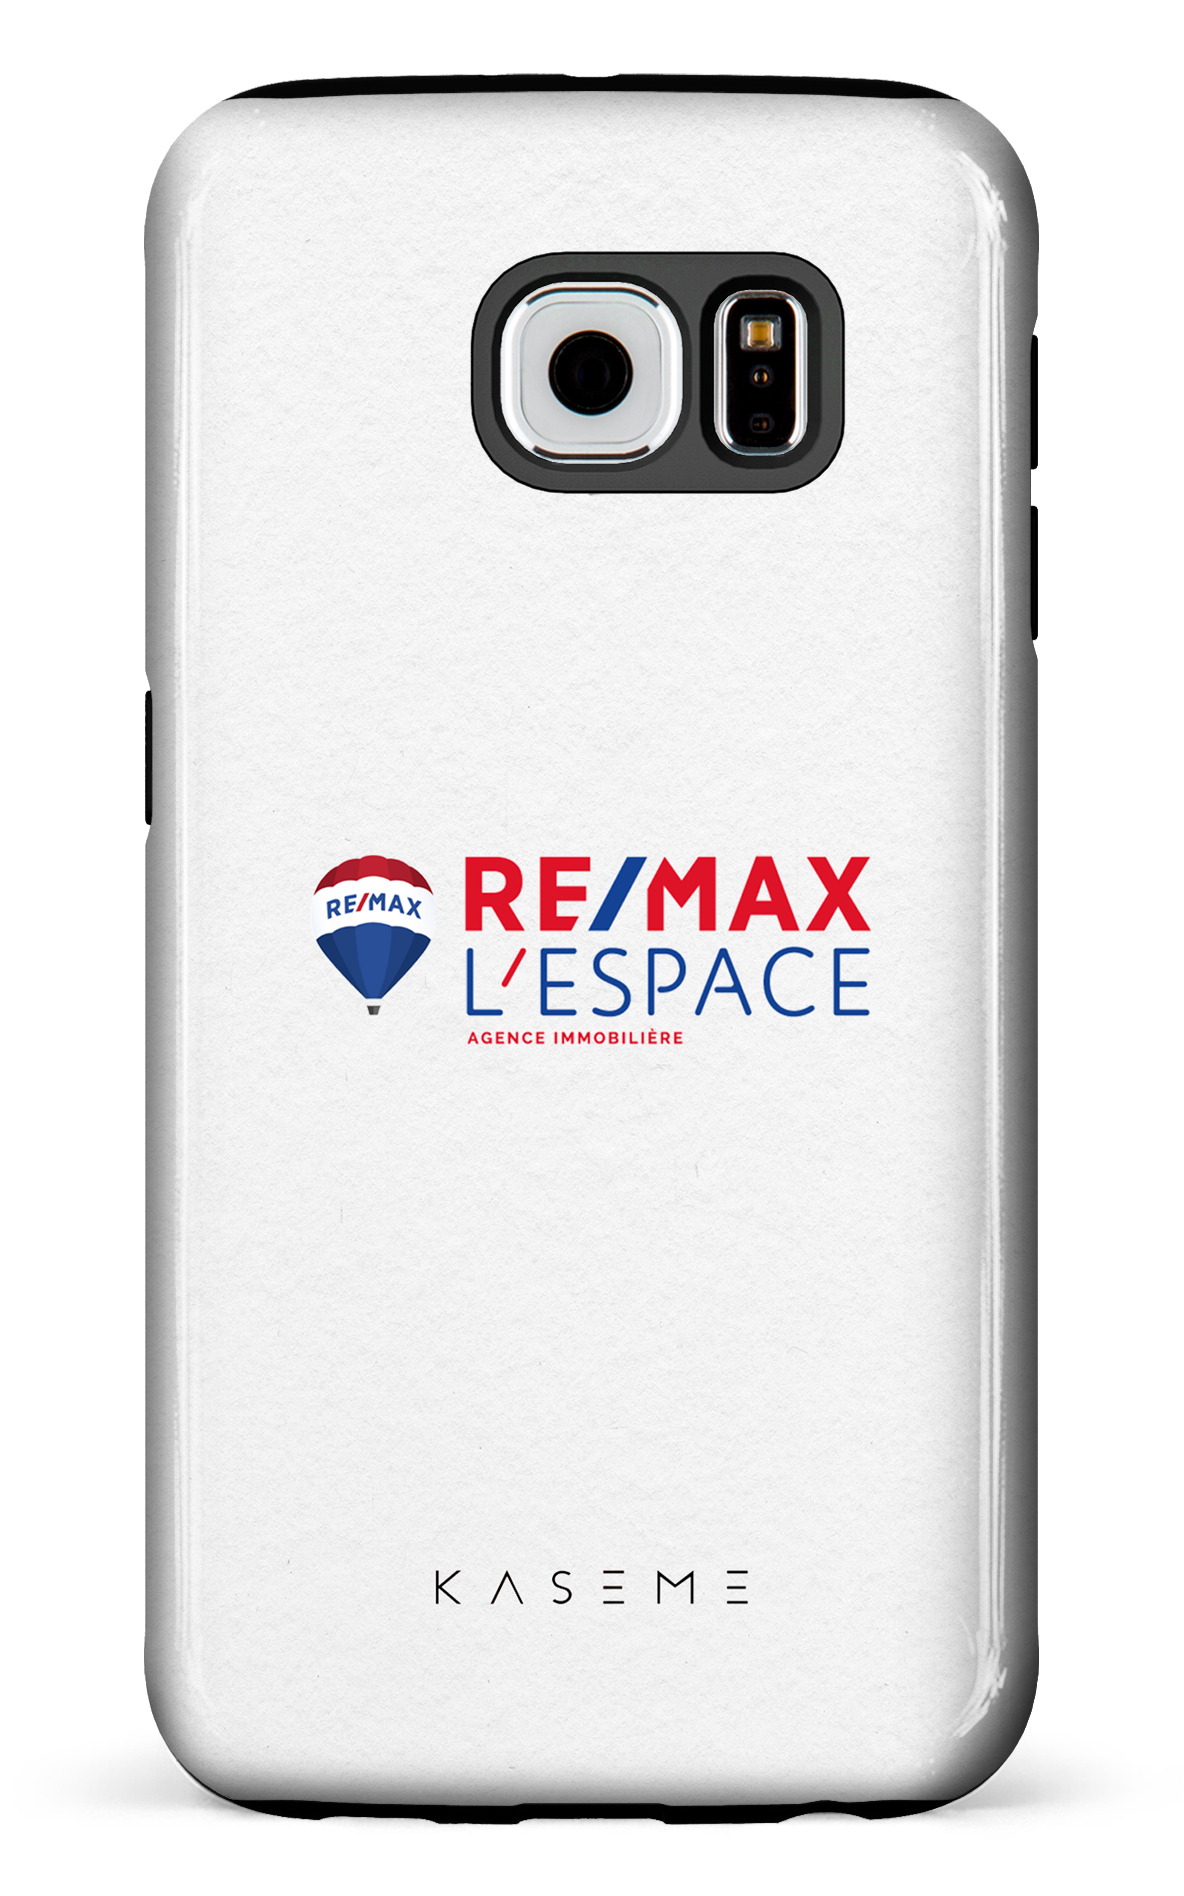 Remax L'Espace Blanc - Galaxy S6